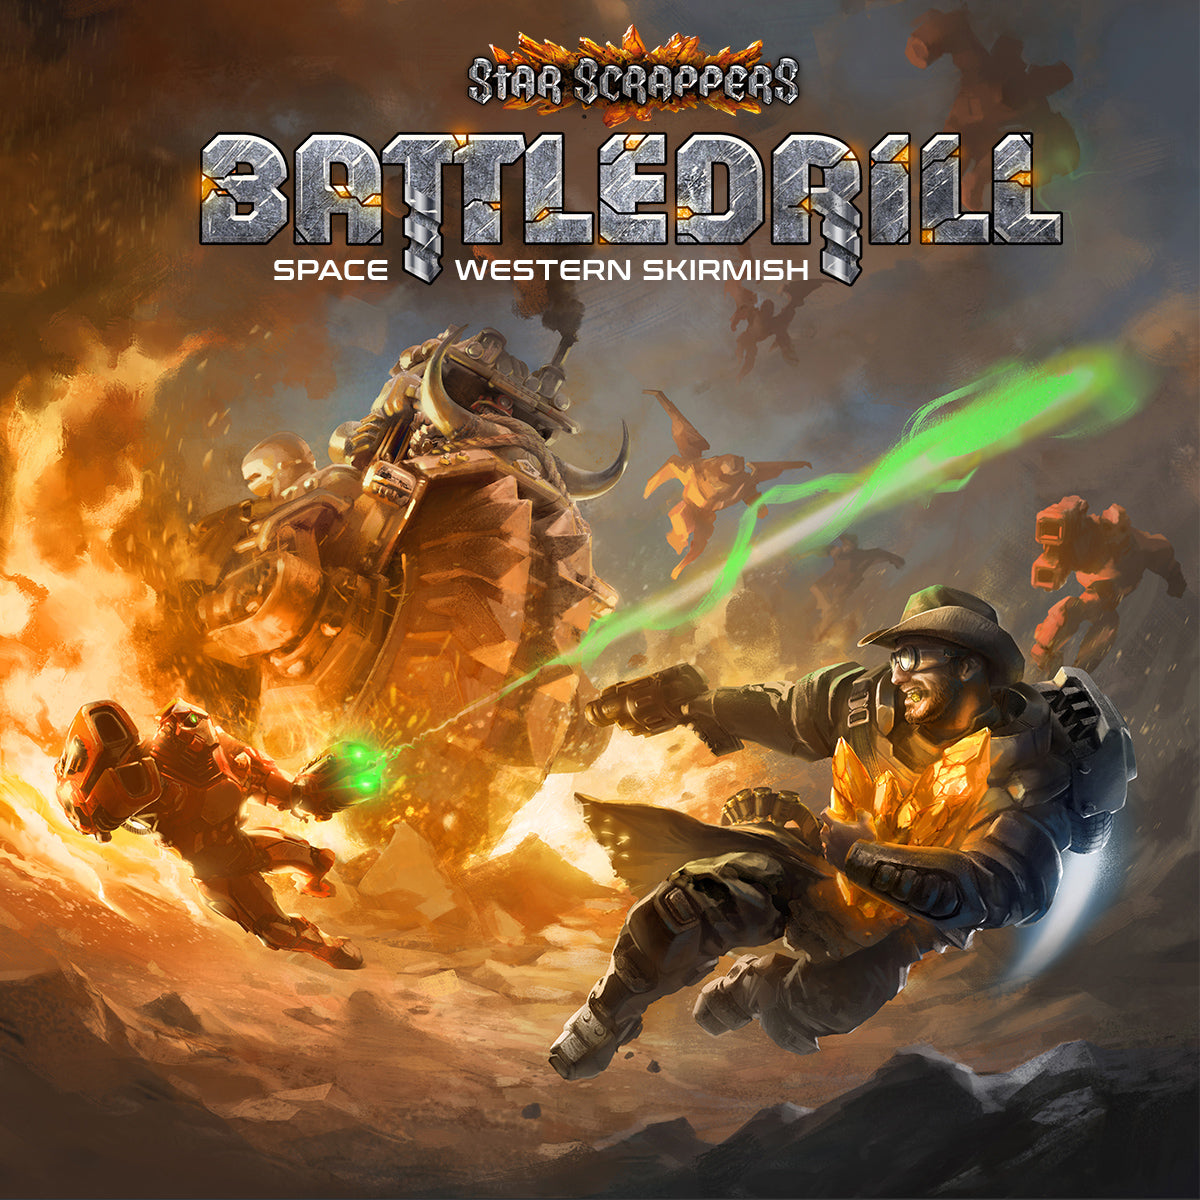 Mot Minegglers Fraktion Battledrill Kickstarter Brettspiele, Rollenspiel Maler